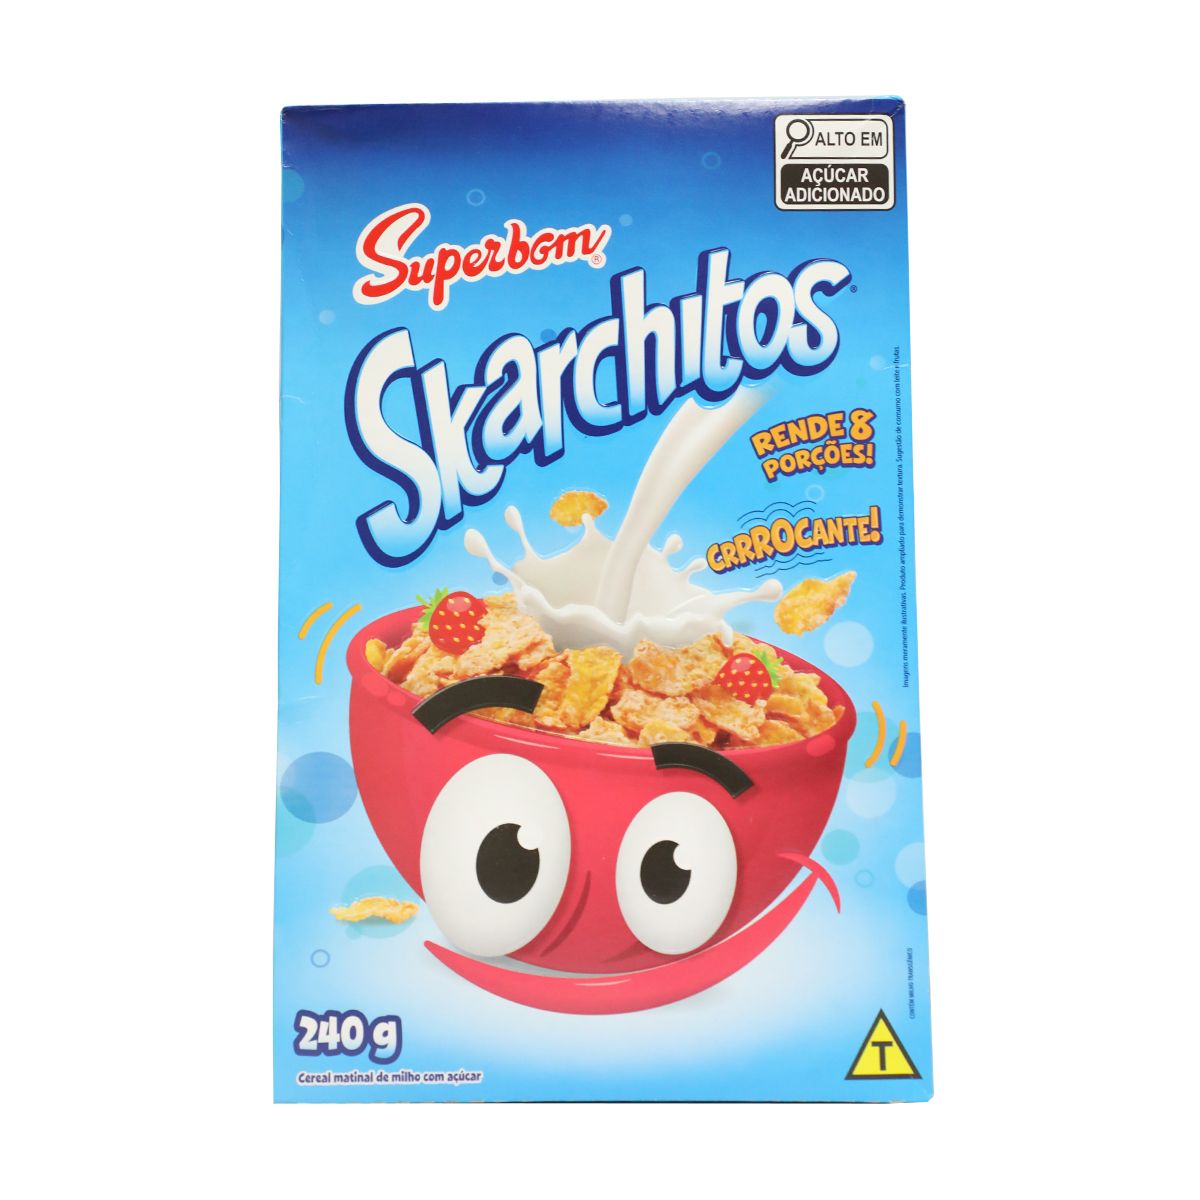 Cereal Matinal Superbom Skarchitos 240g